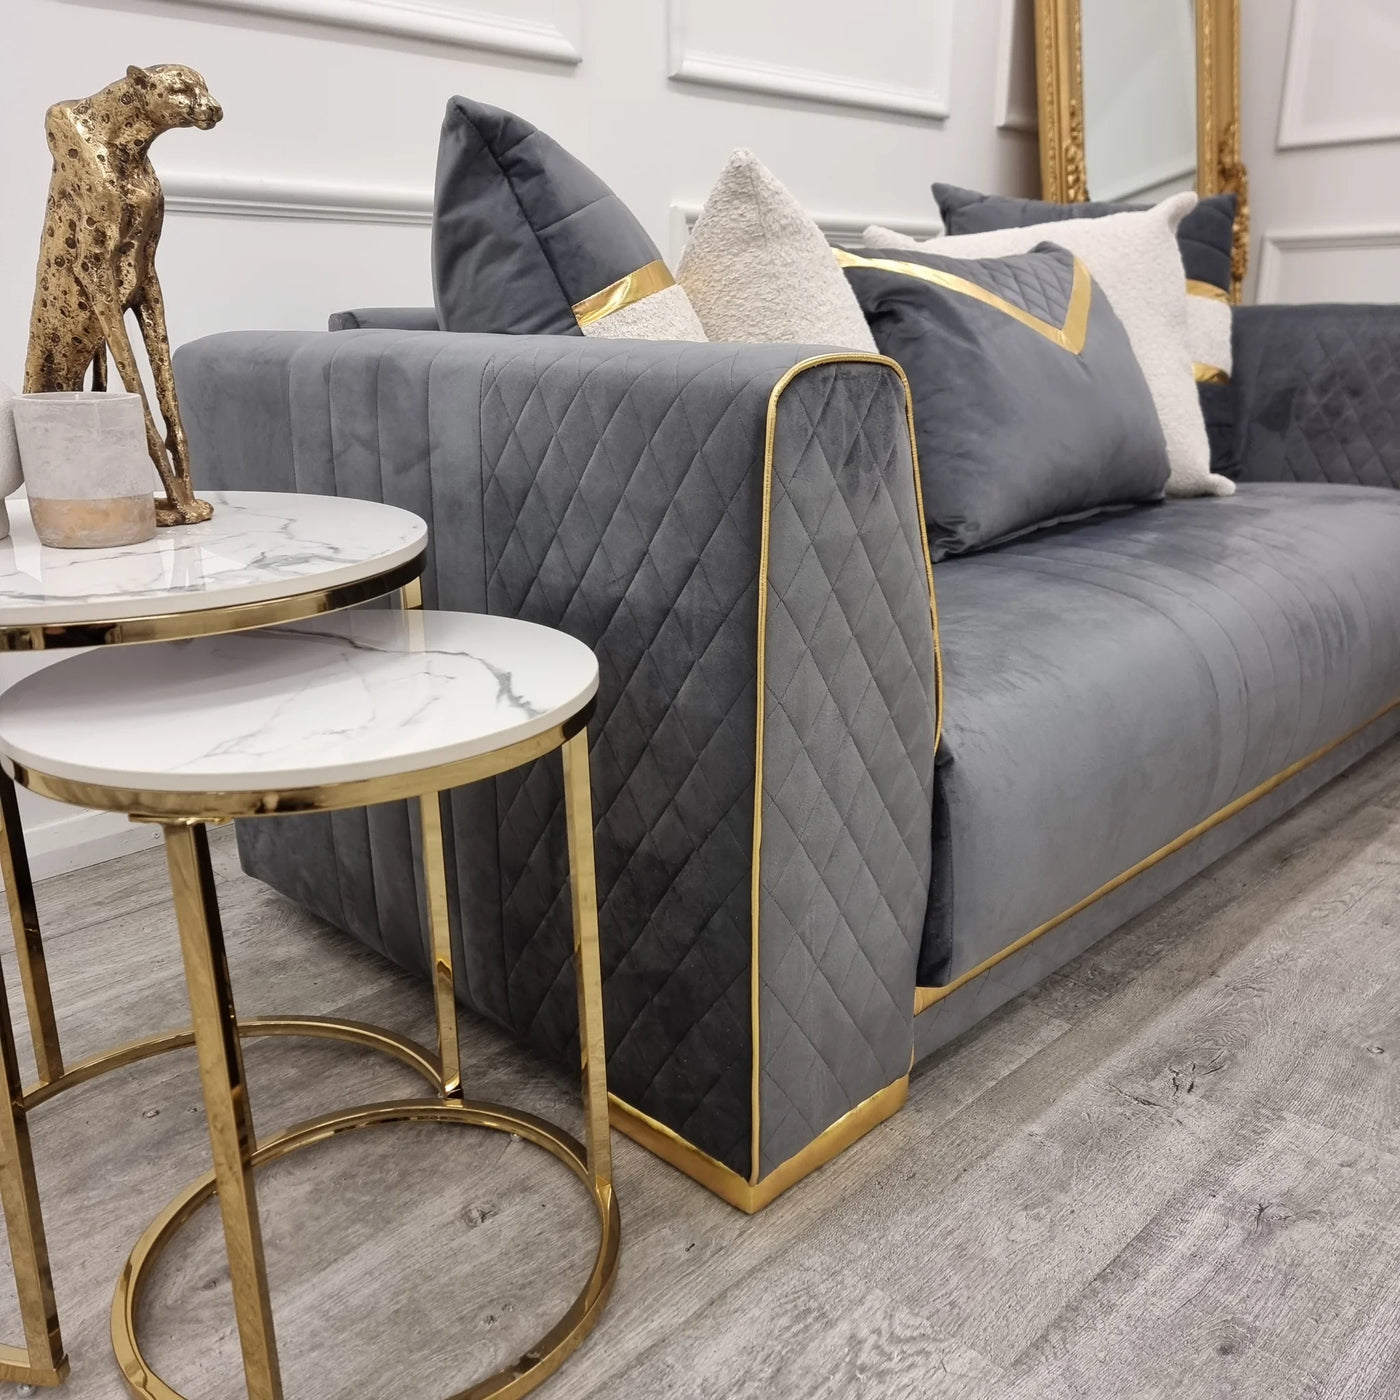 Romeo 3 & 2 Seater Sofa Set - Grey & Gold Plush Velvet Quilted